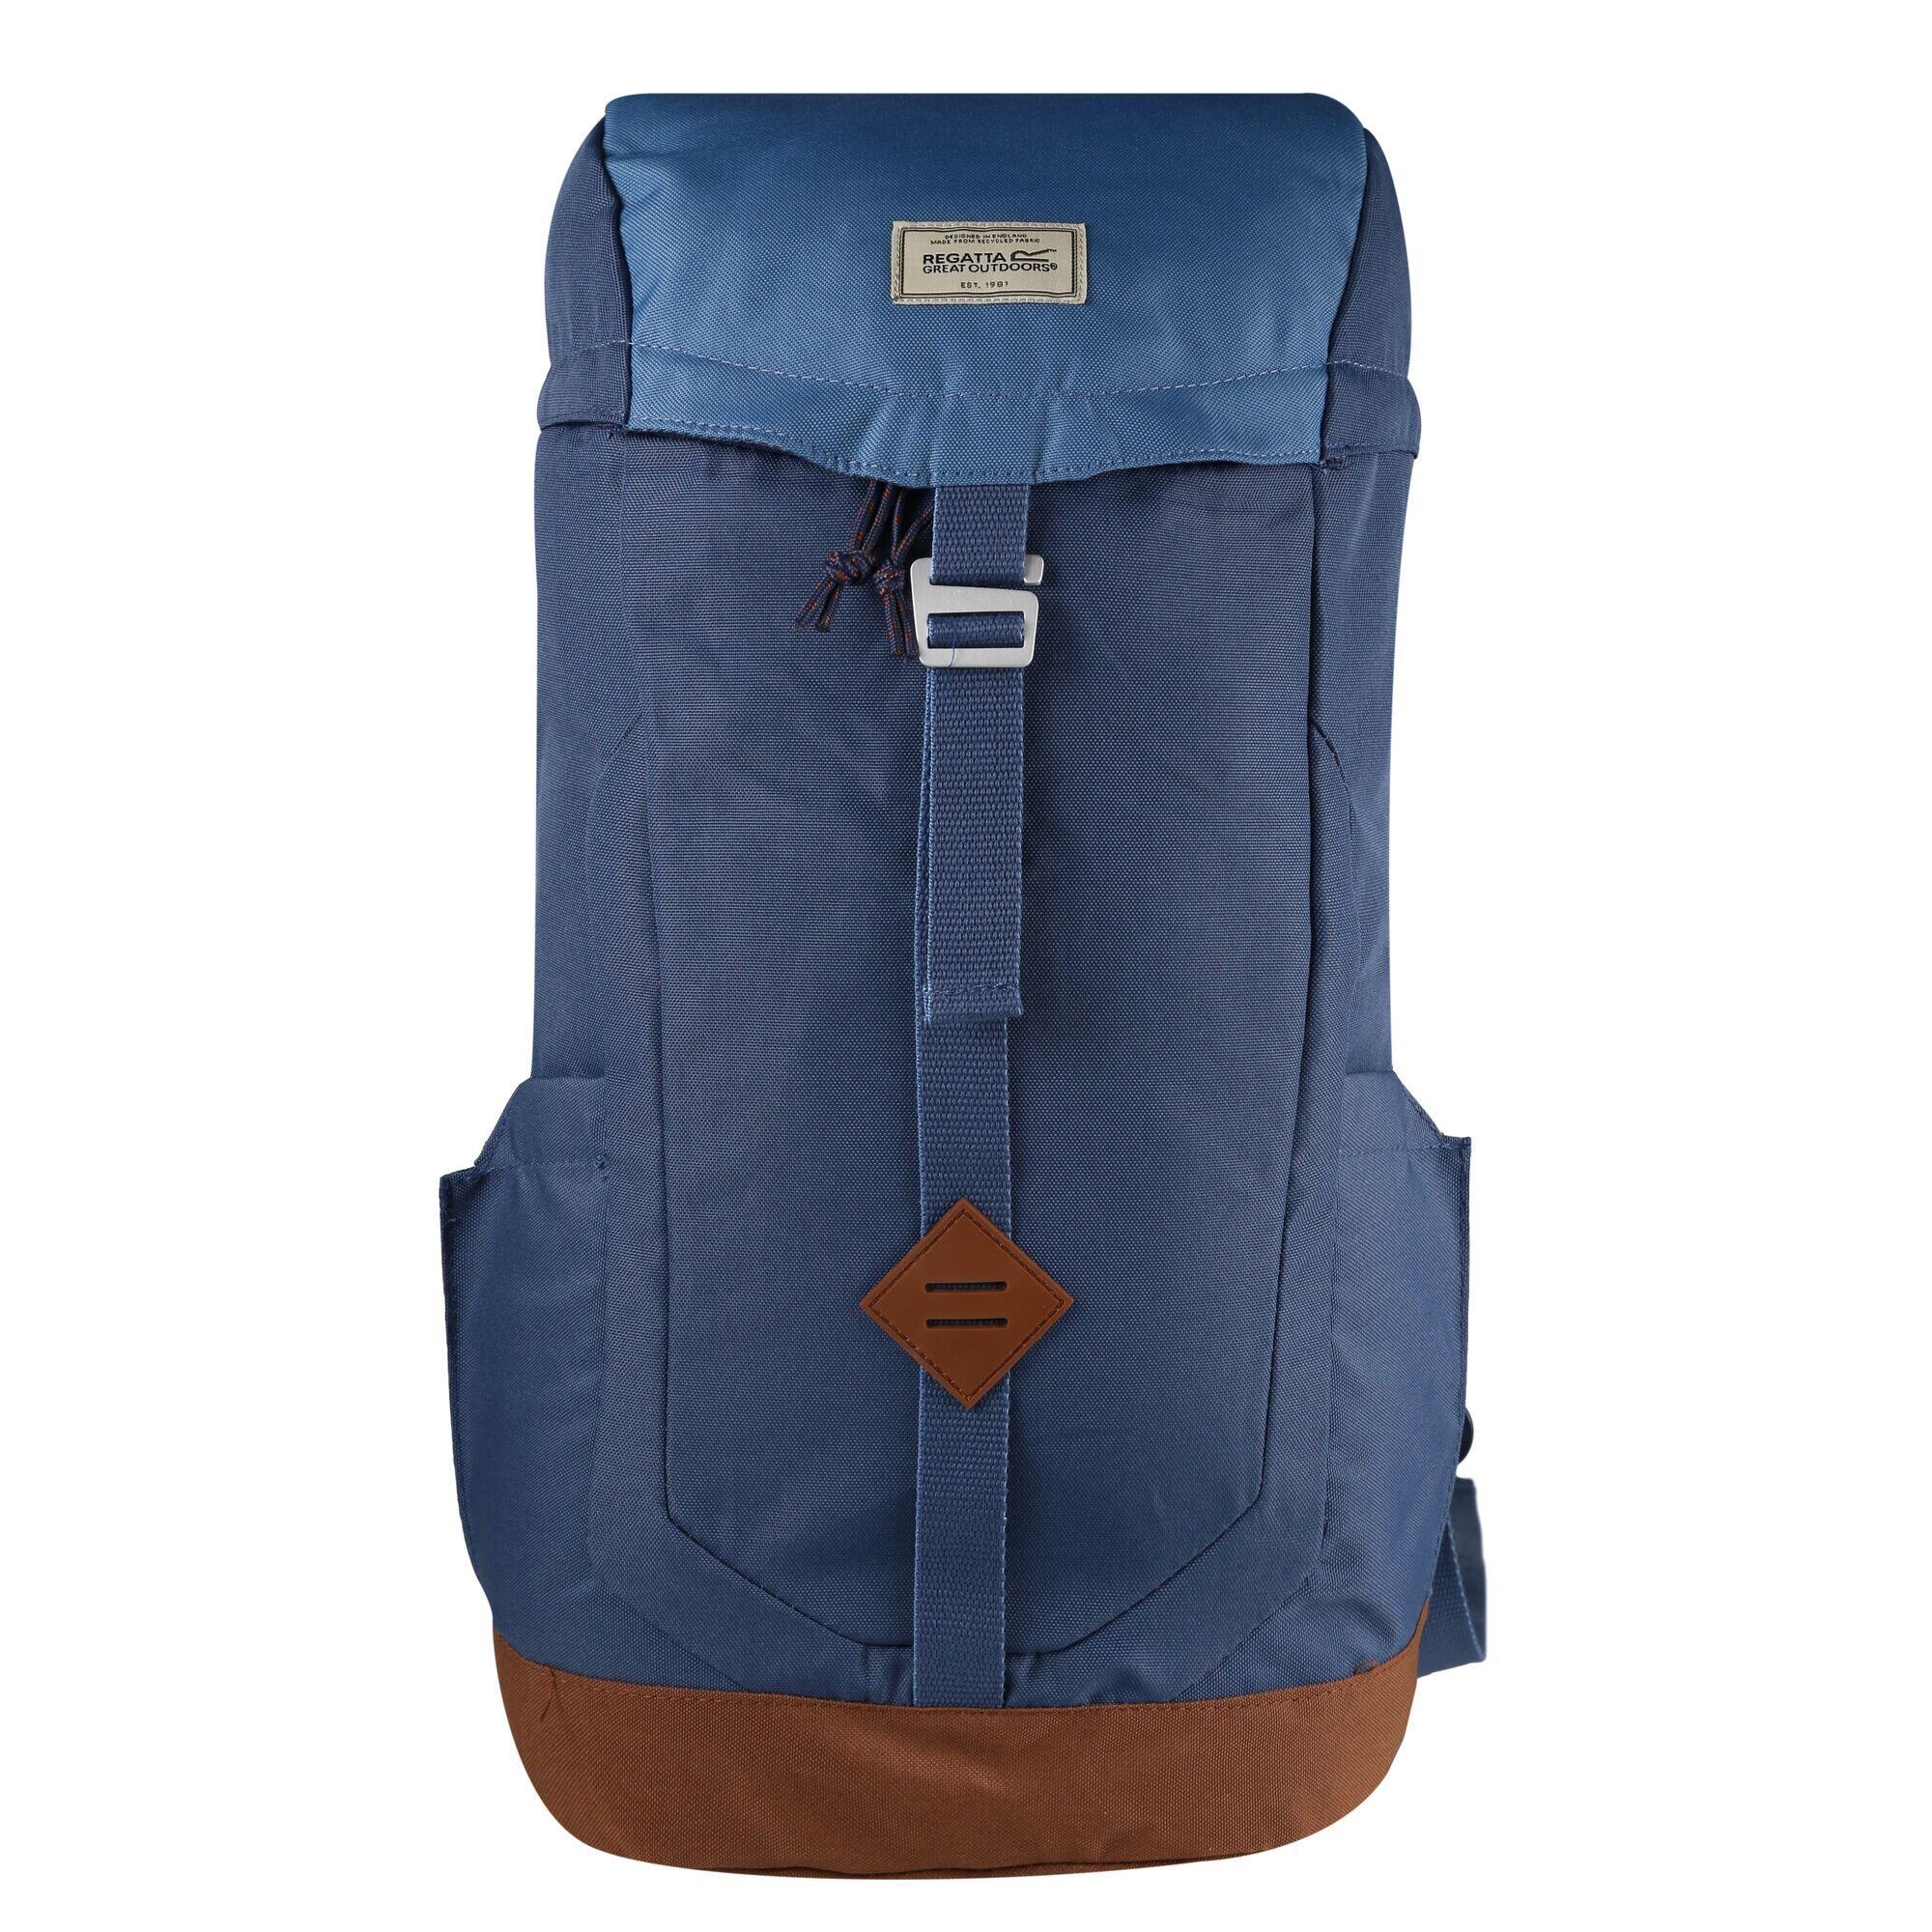 REGATTA Stamford 25L Backpack (Dark Denim/Stellar Blue)